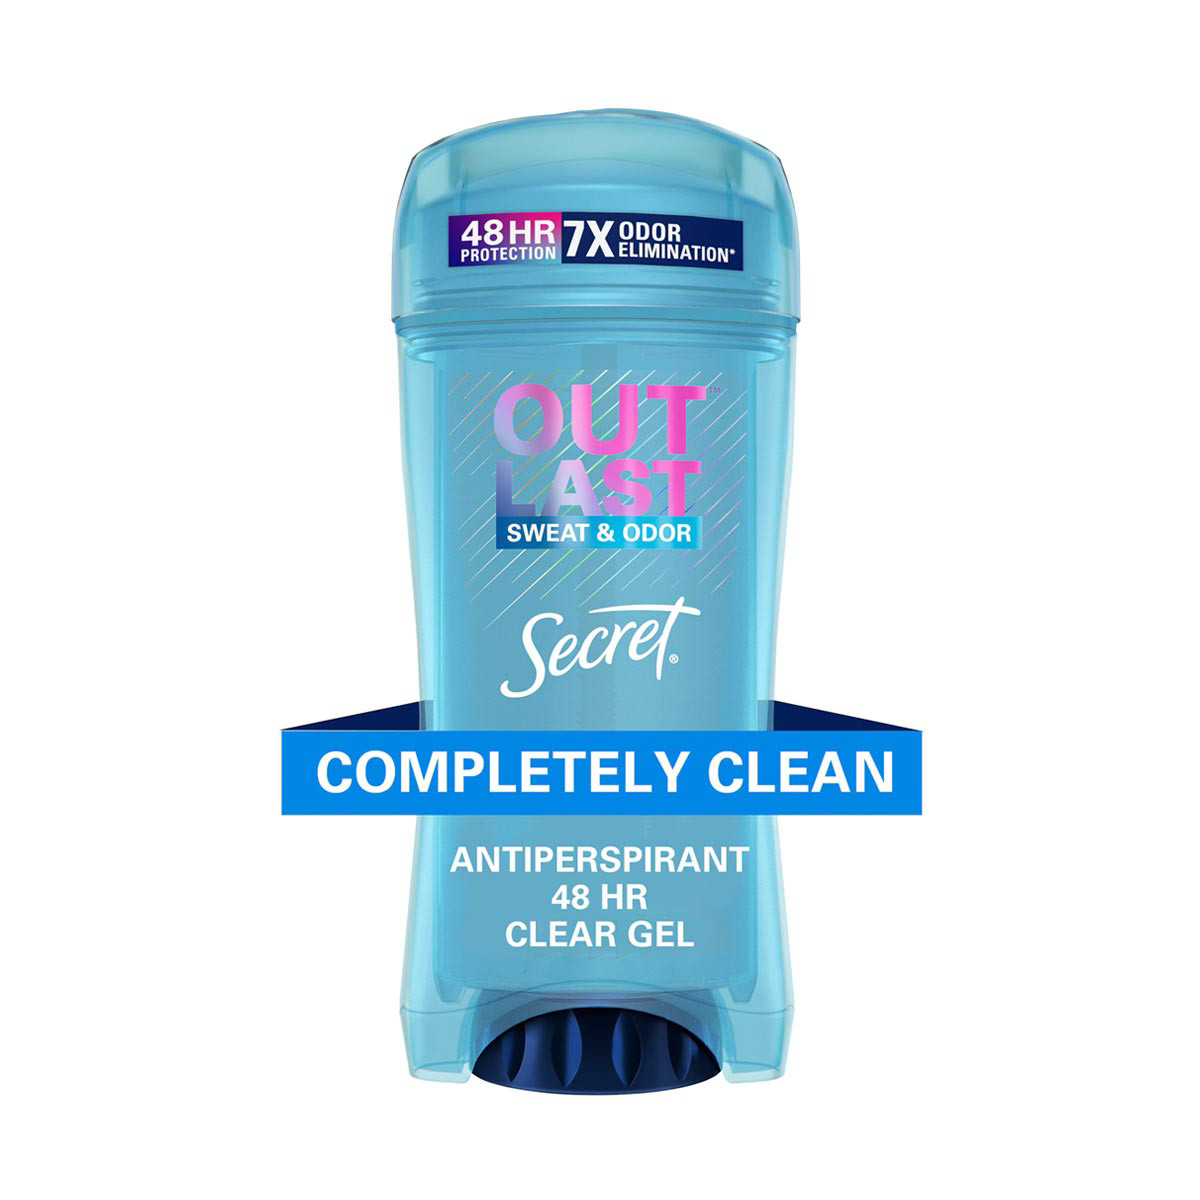 Secret Outlast Clear Gel Antiperspirant Deodorant For Women - Completely Clean